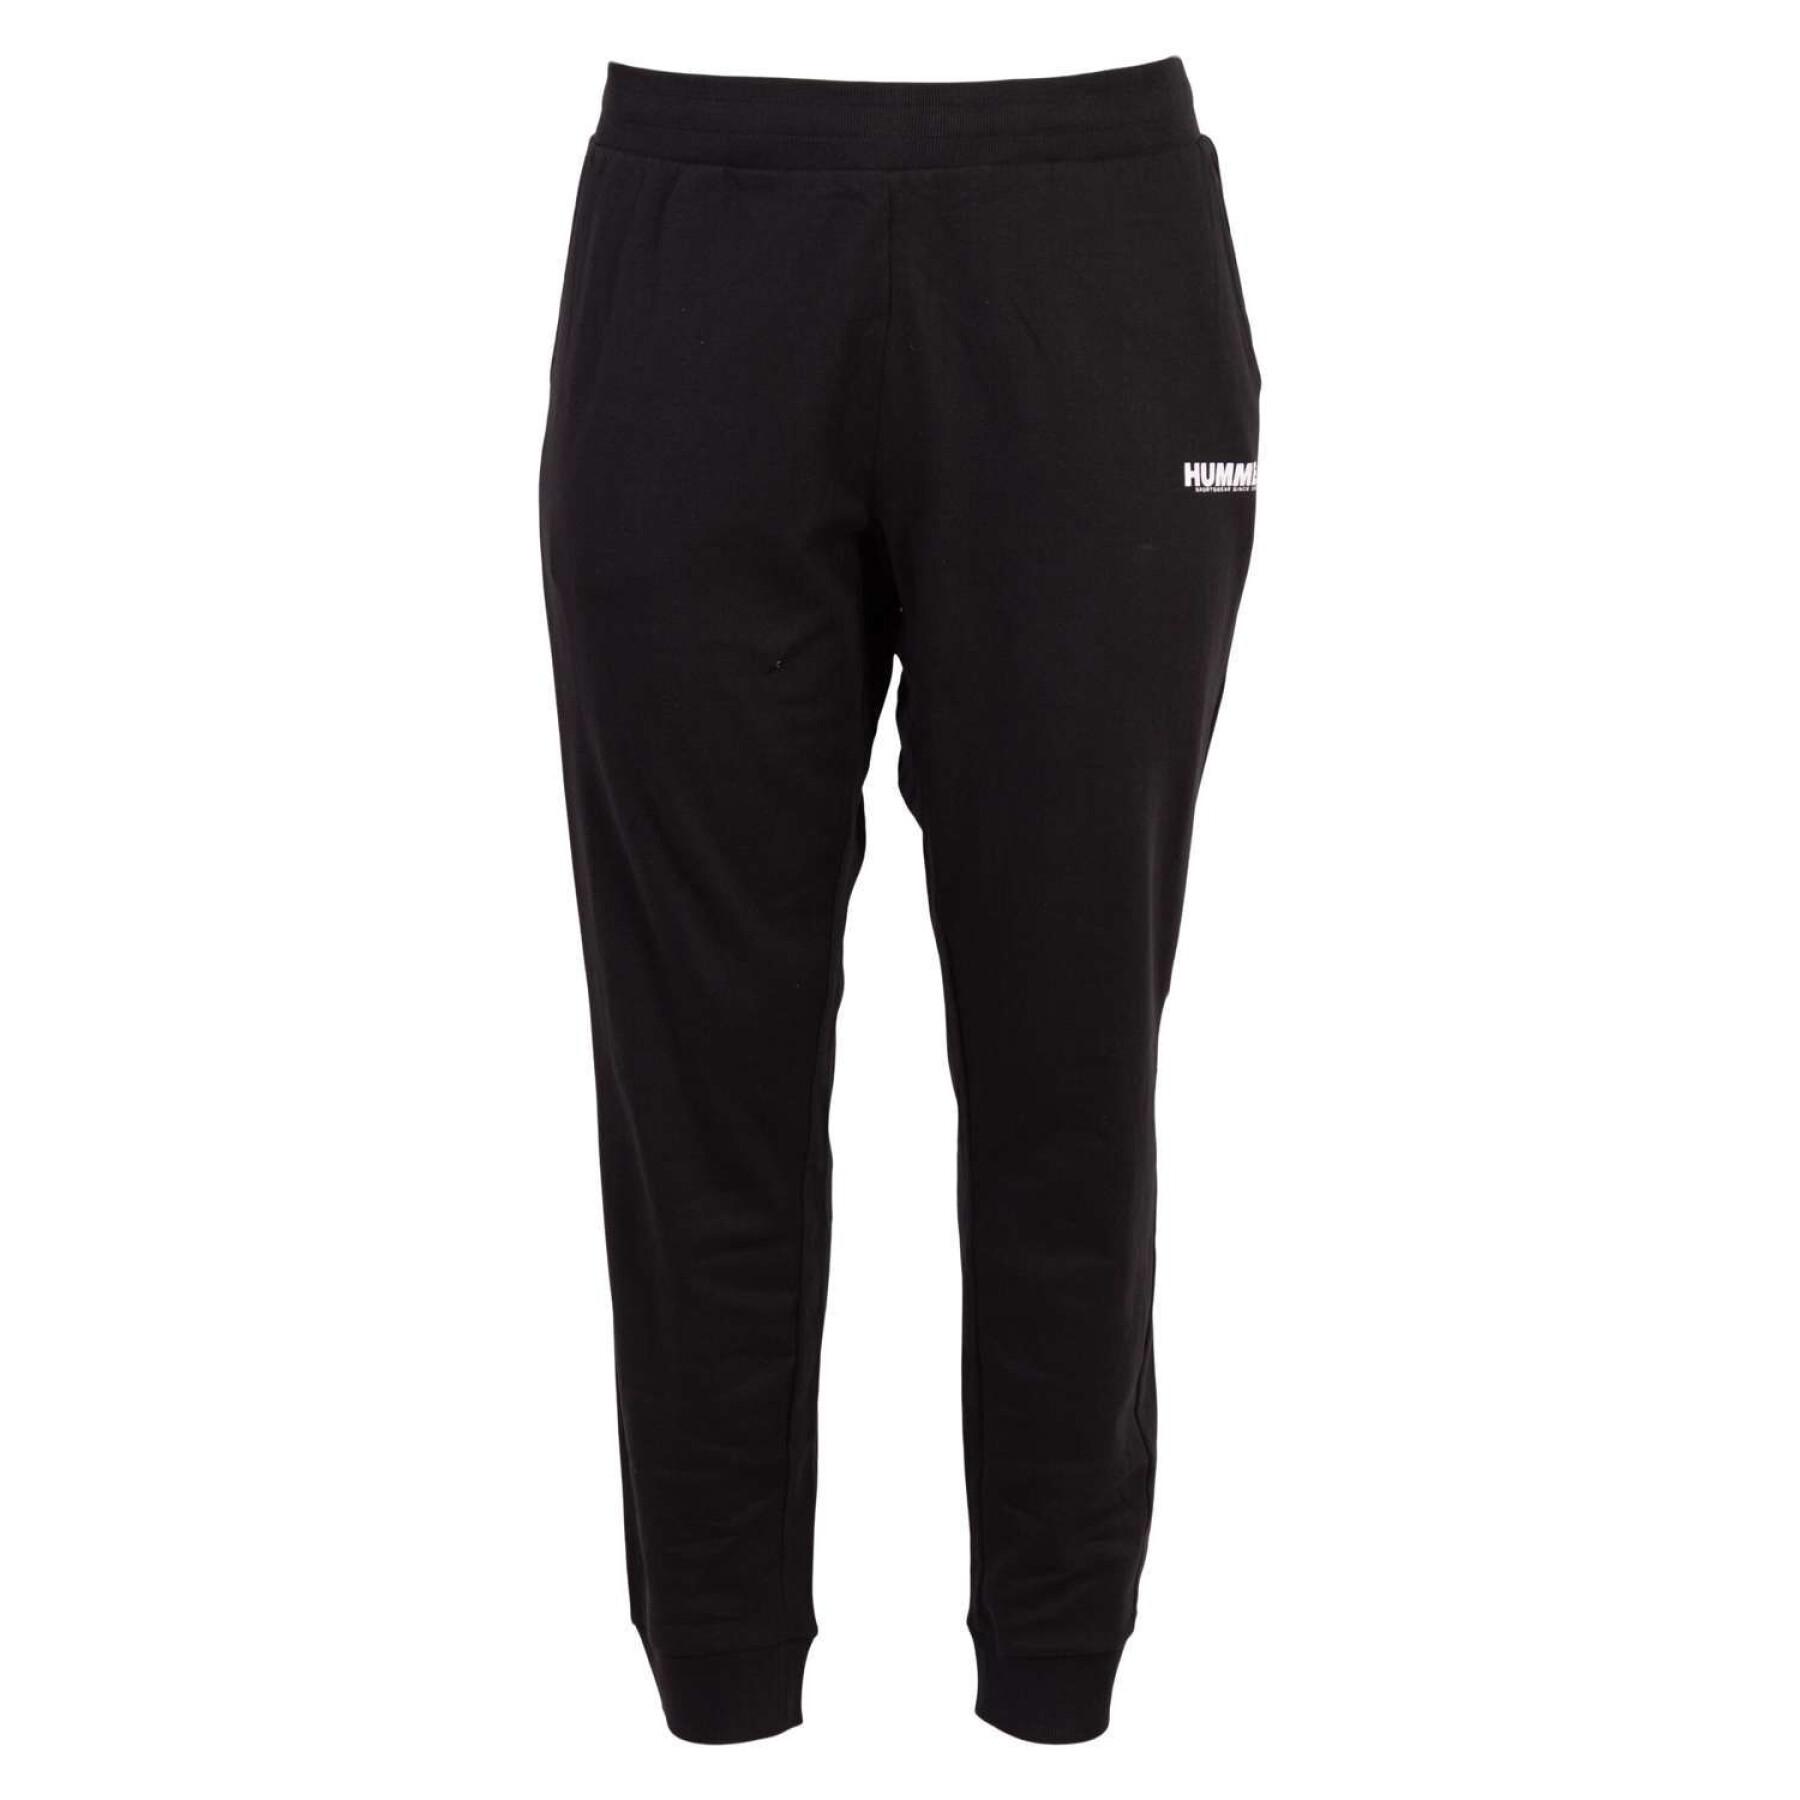 Women\'s tapered jogging suit Hummel Legacy Plus - Hummel - Brands -  Lifestyle